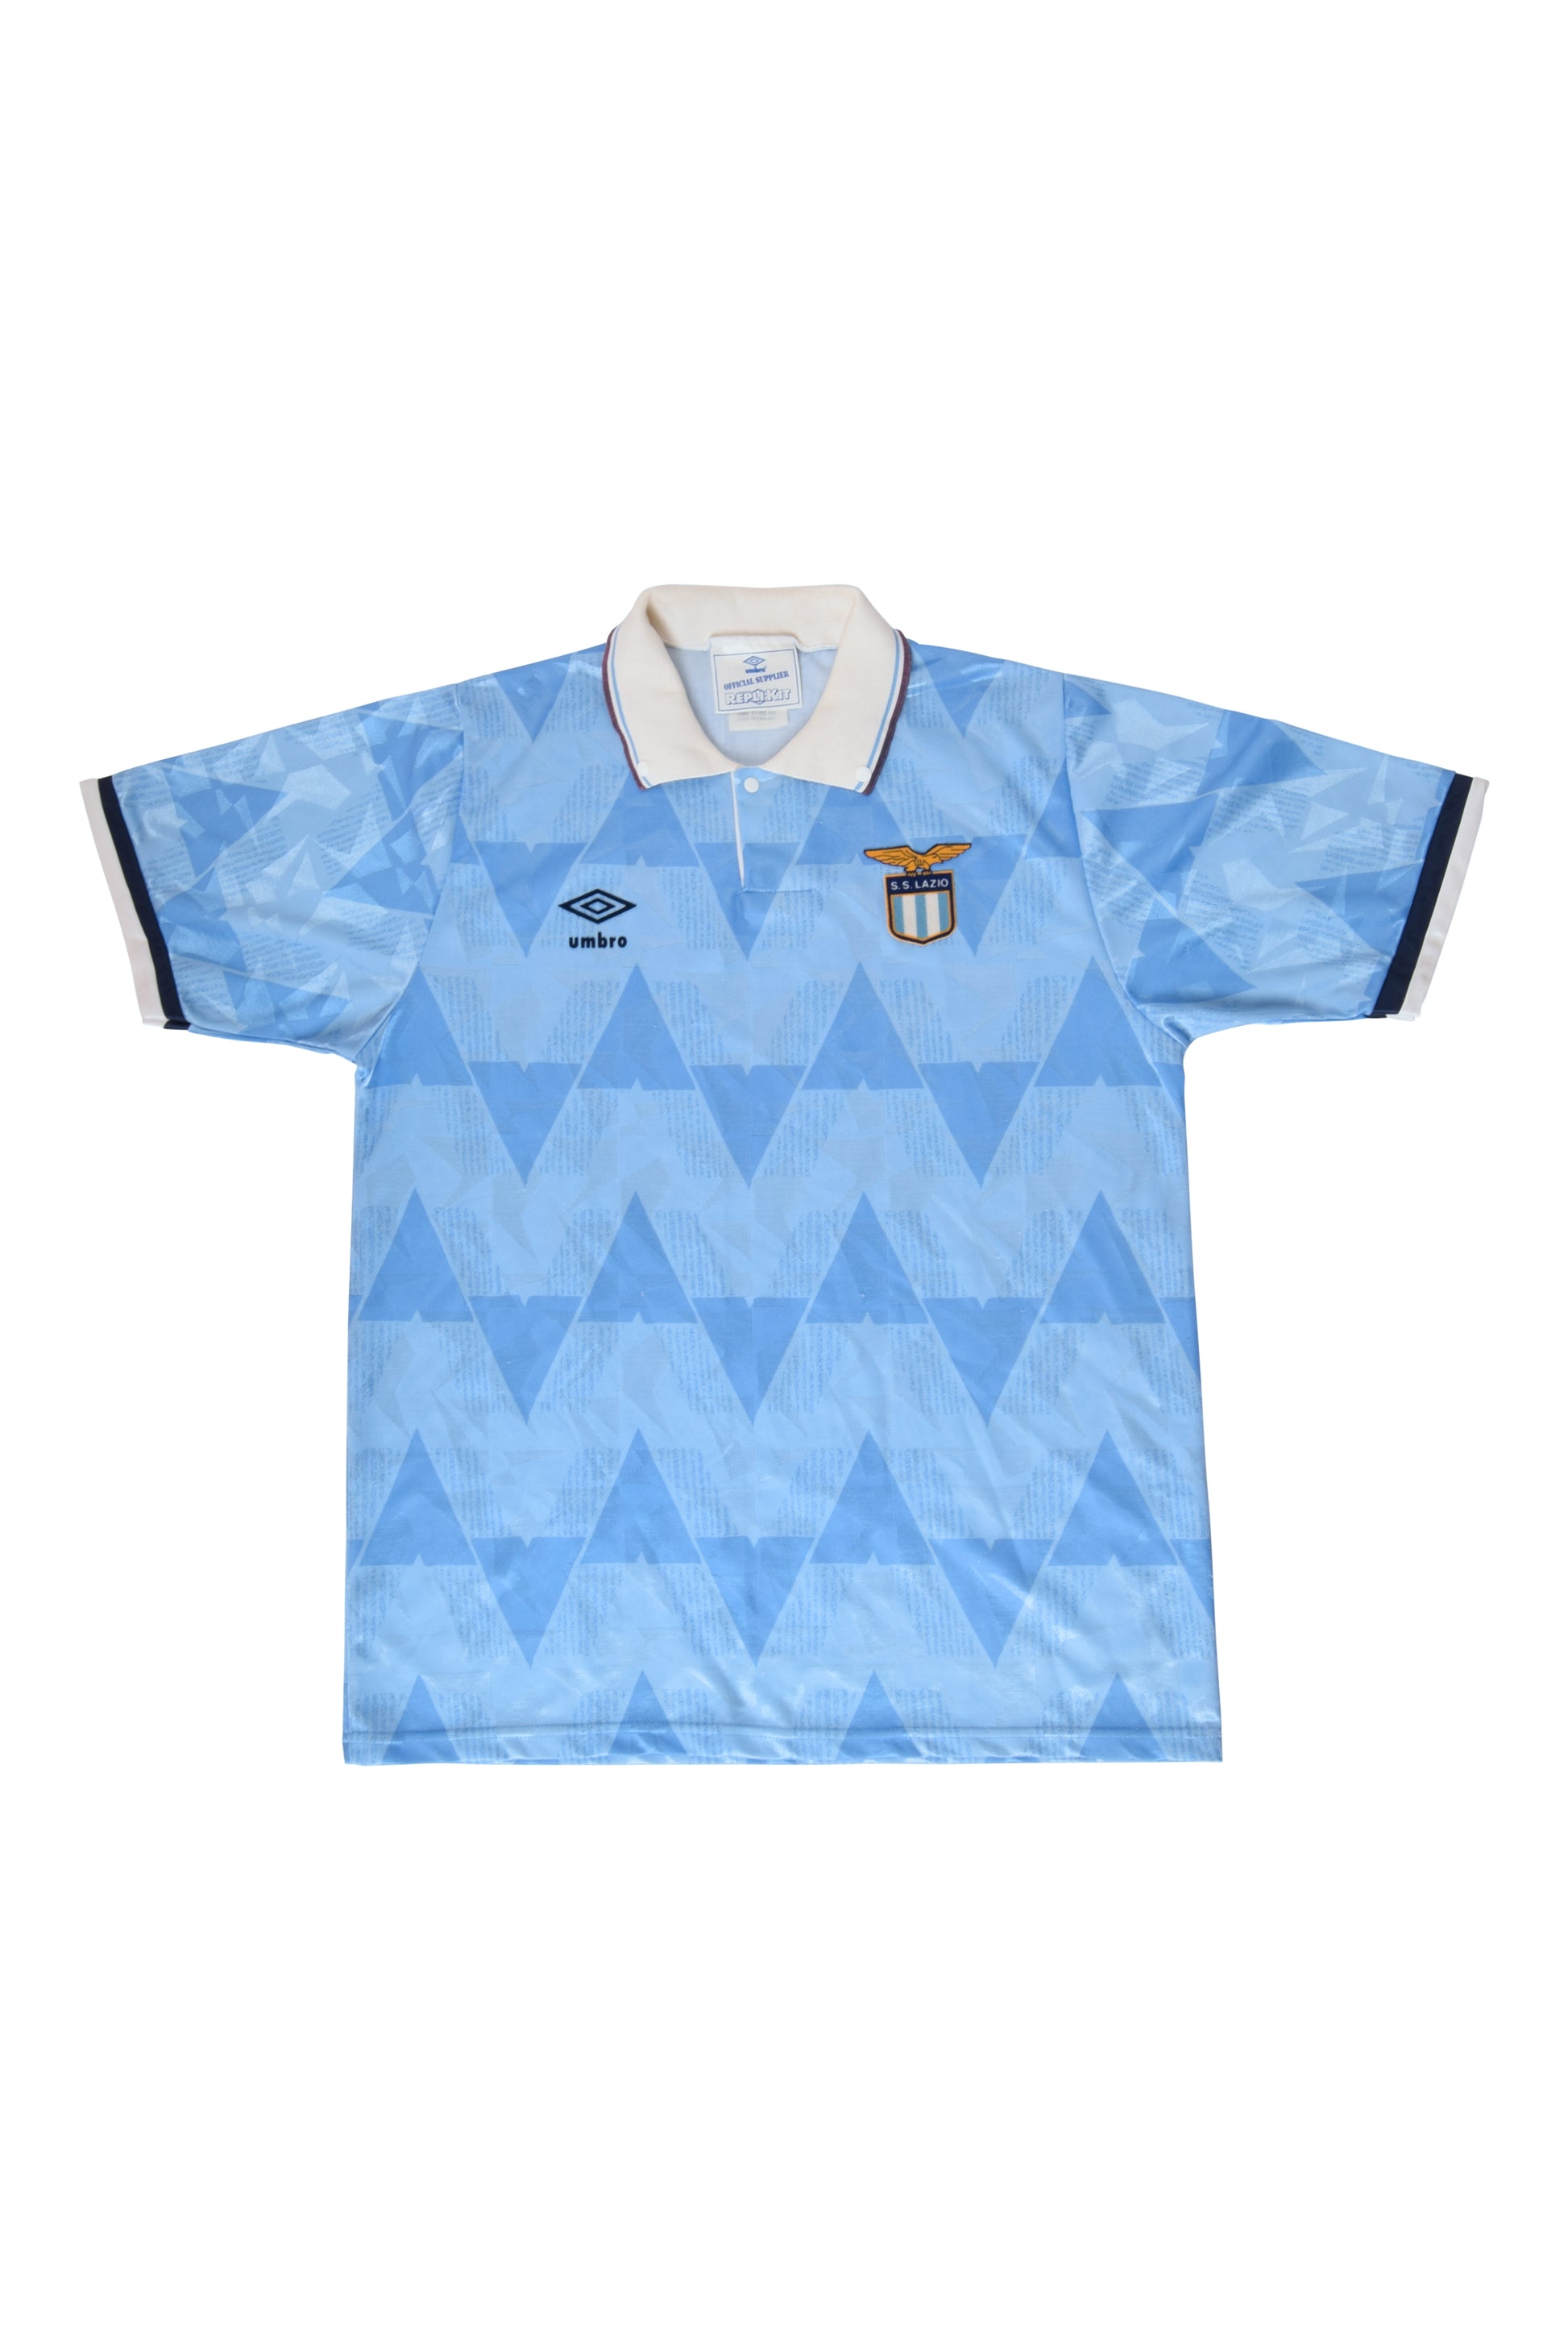 Vintage Lazio Roma Umbro 1989-1991 Home Football Shirt Size M Made in England